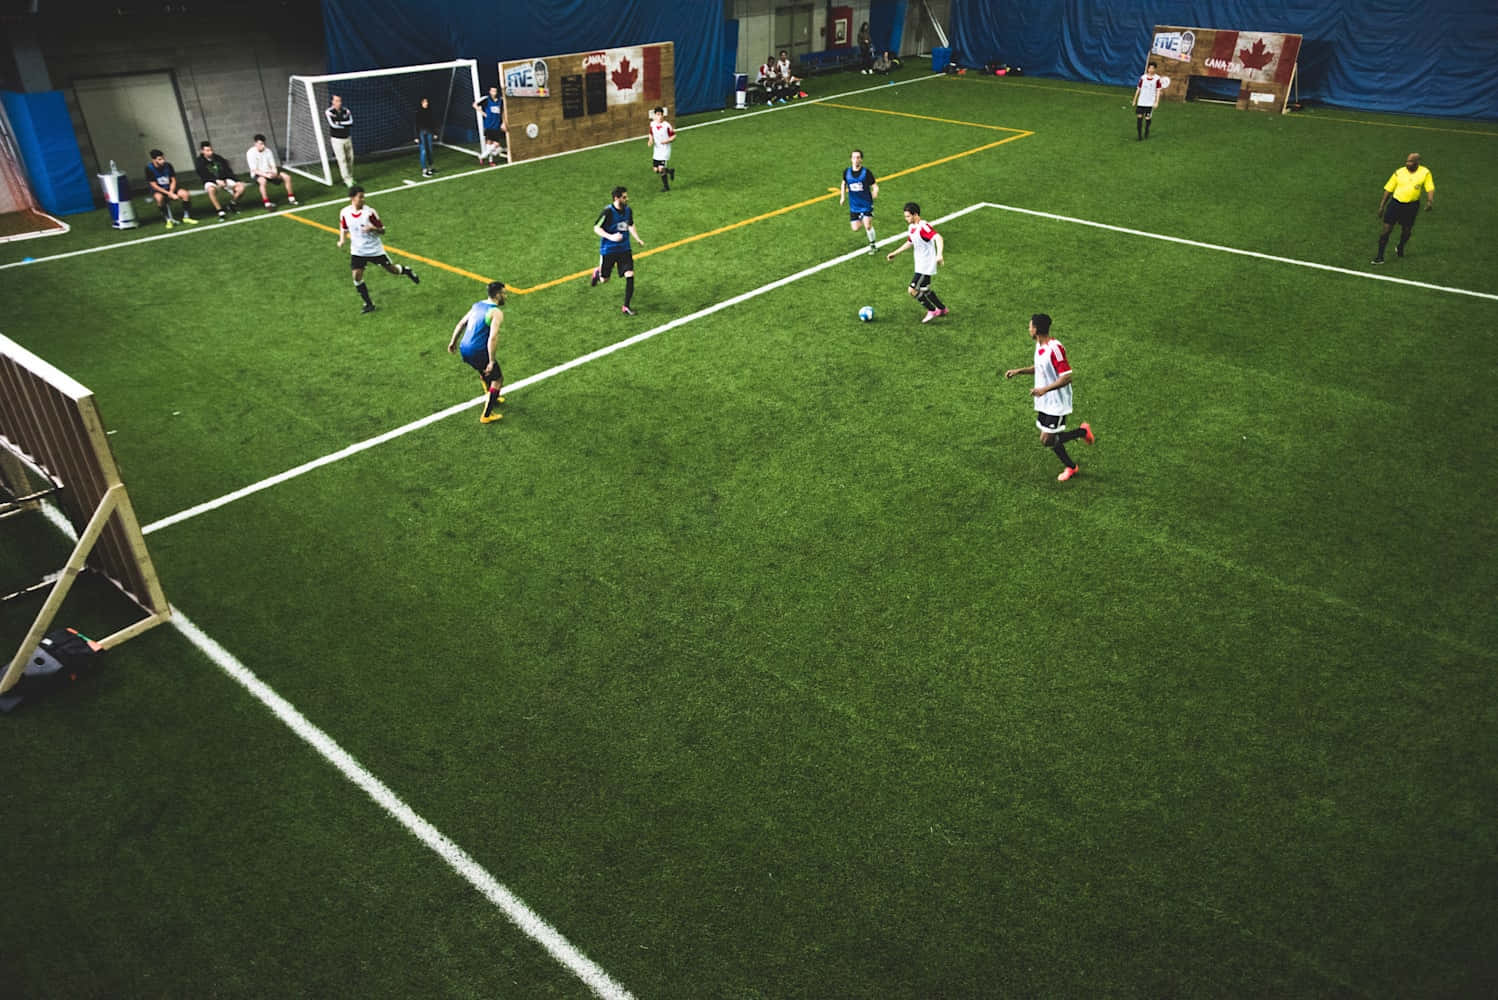 Indoor Soccer Match Action.jpg Wallpaper